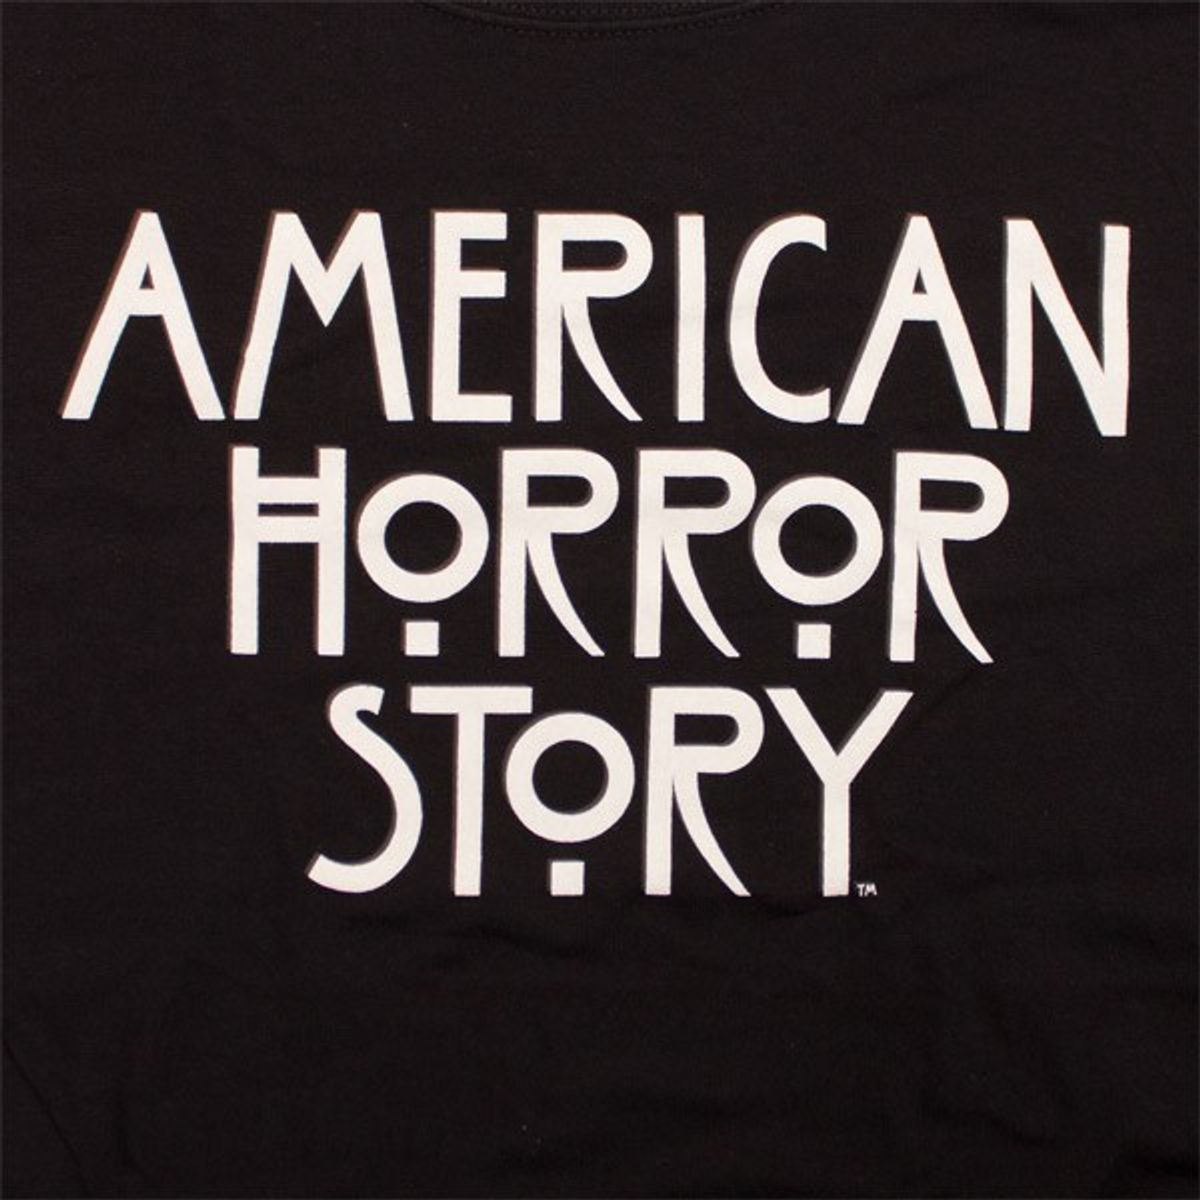 5 Reasons Why I Still Watch American Horror Story